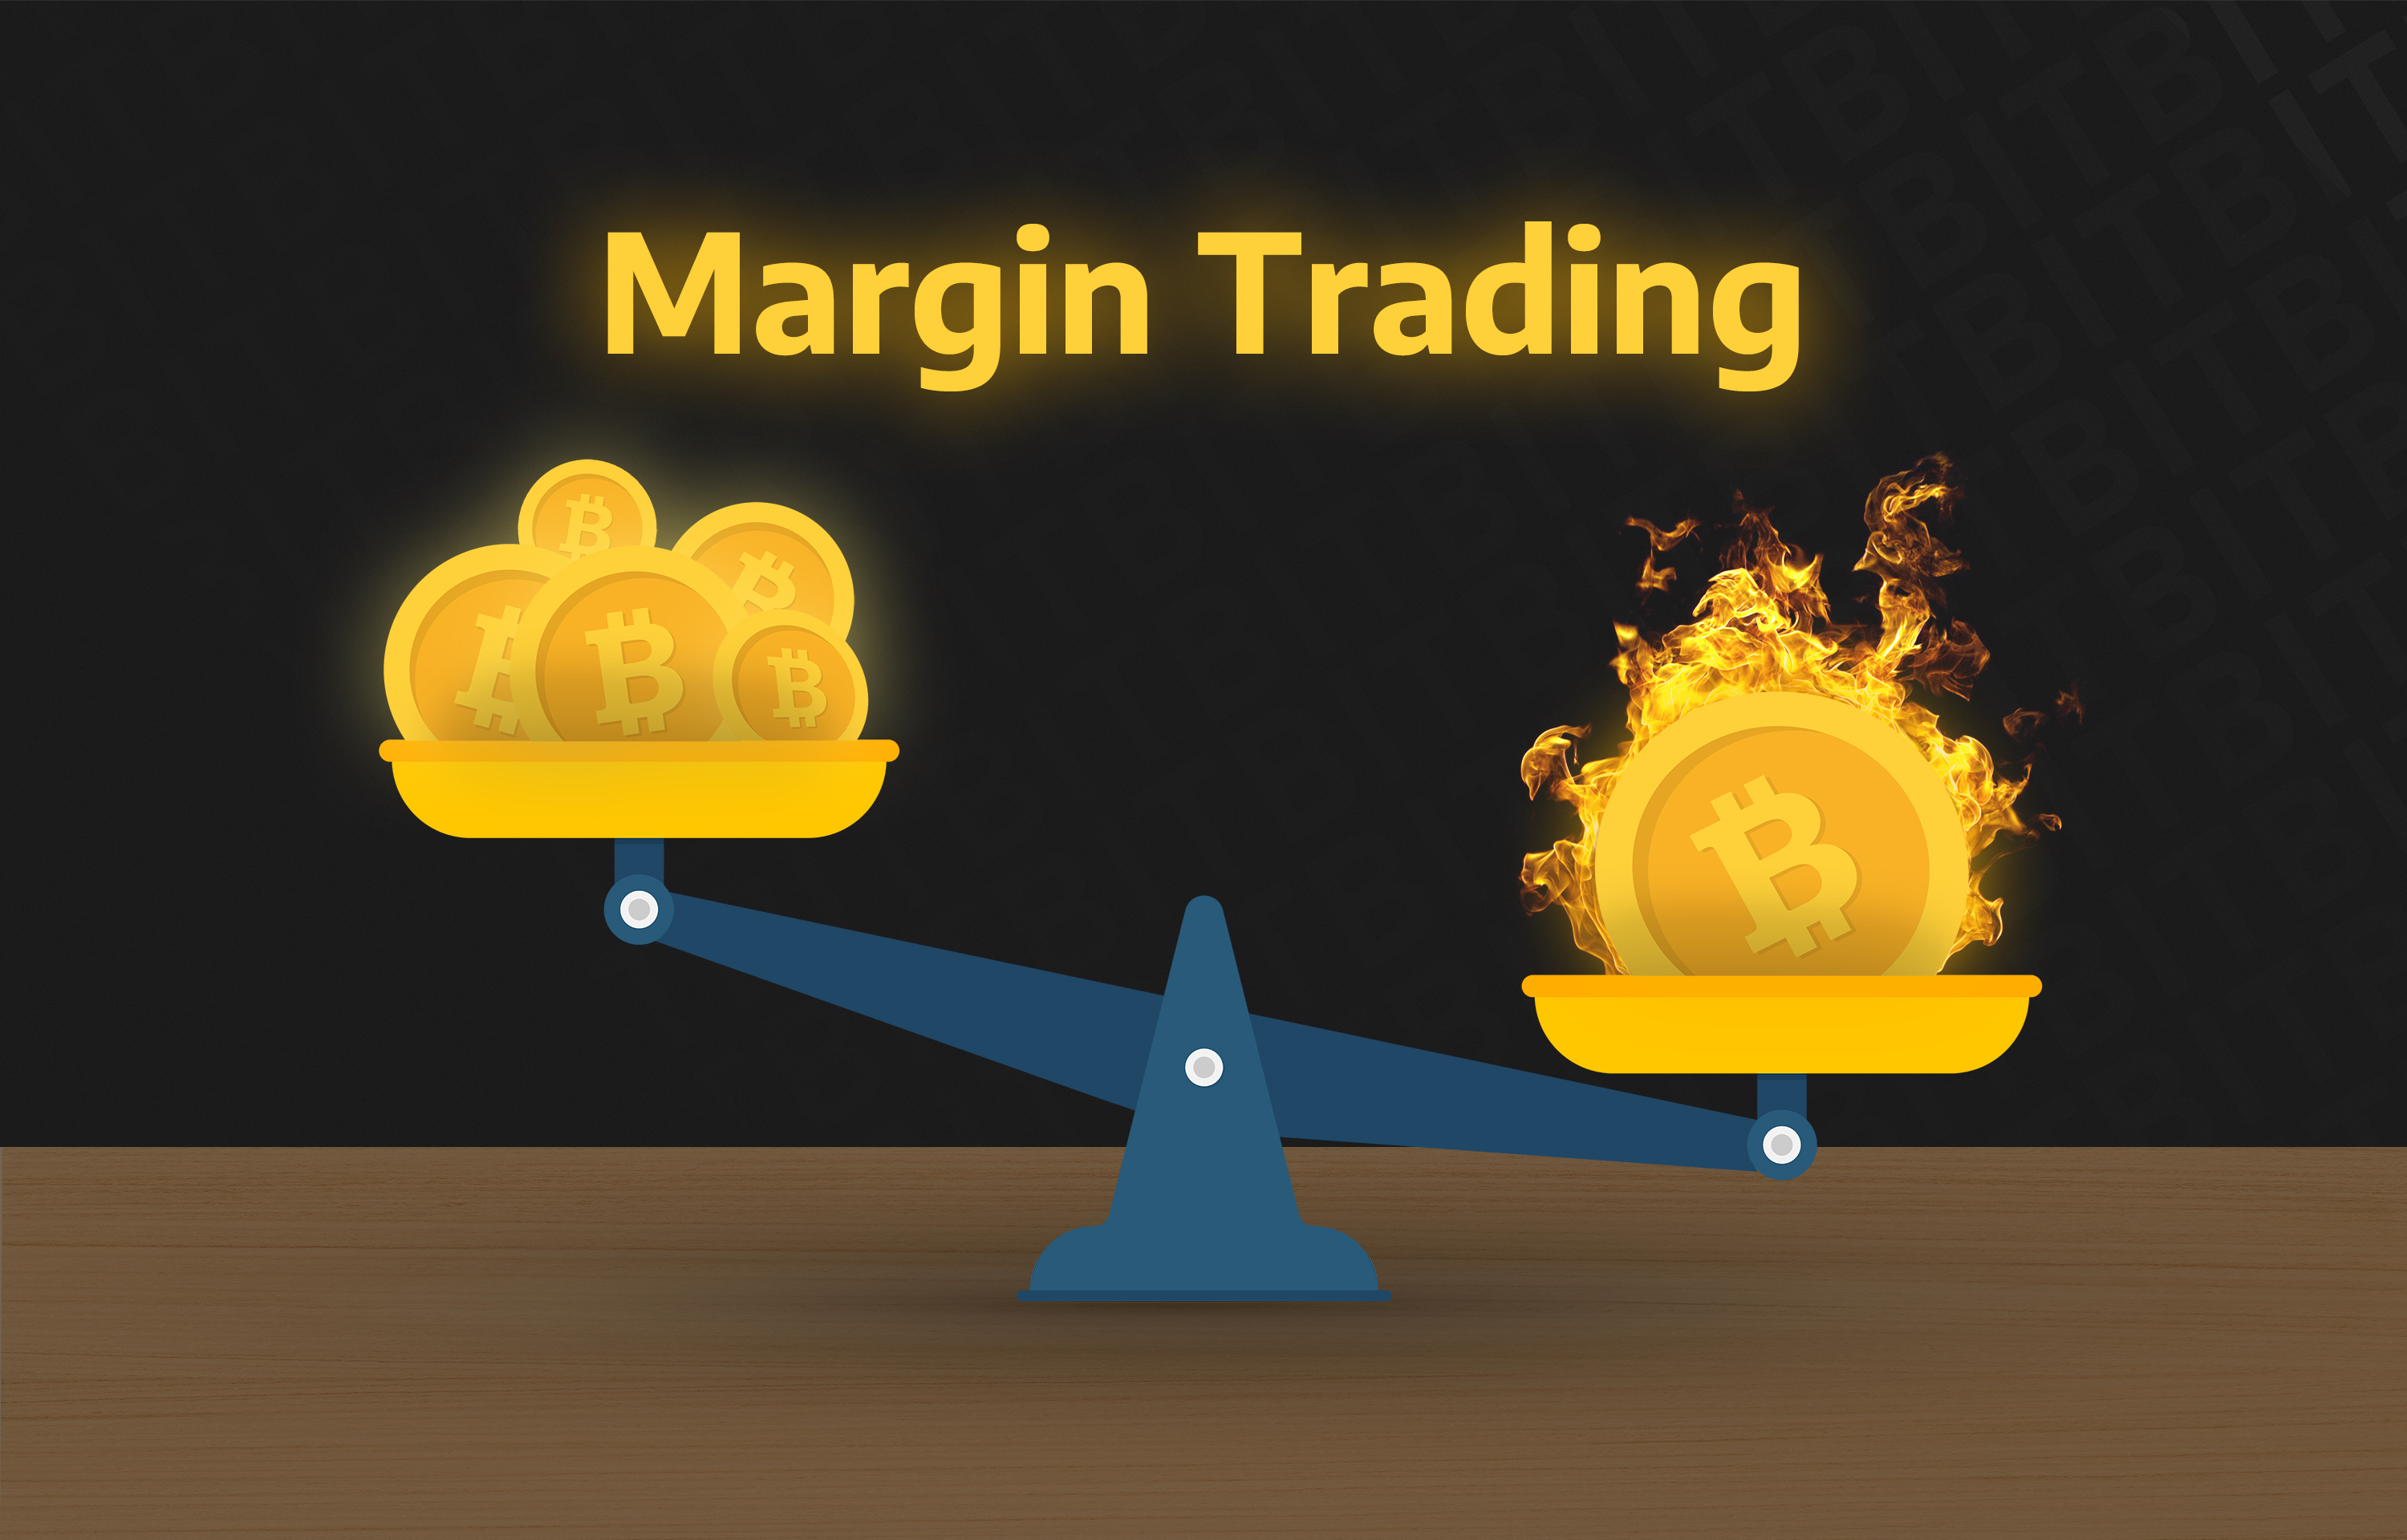 Balancing Scale - Margin Trading + Title